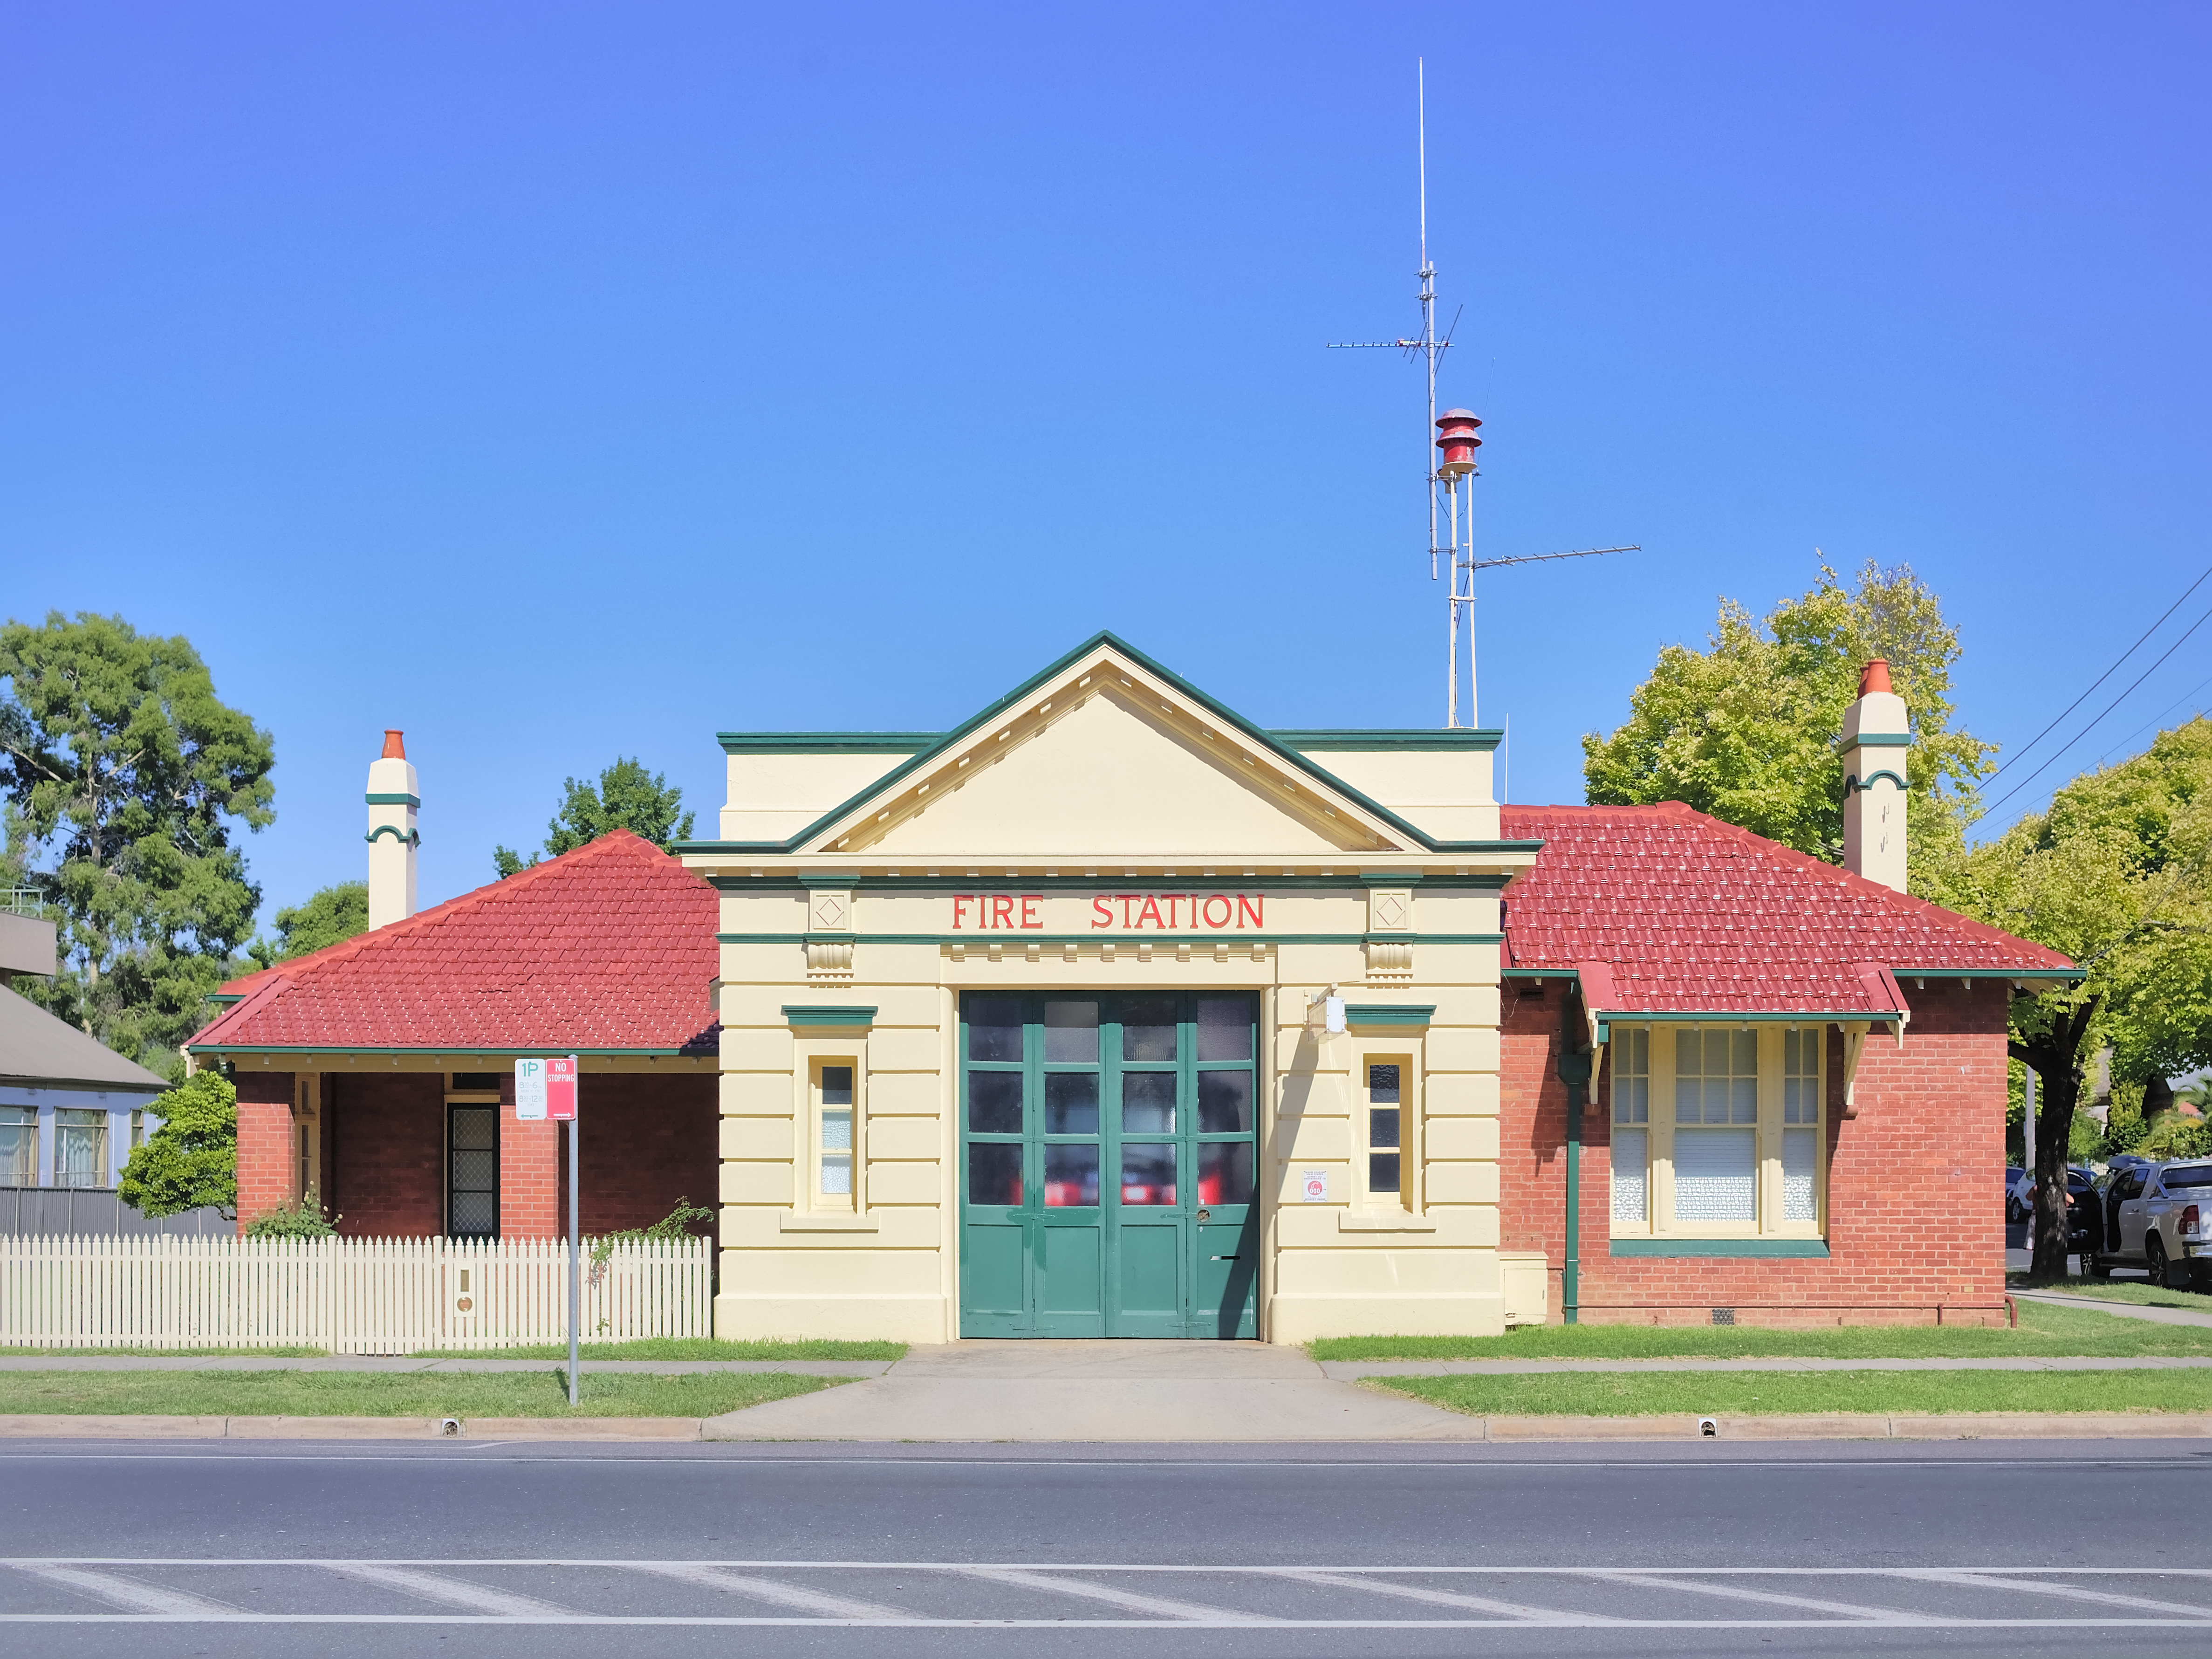 Fire Station building, Albury NSW